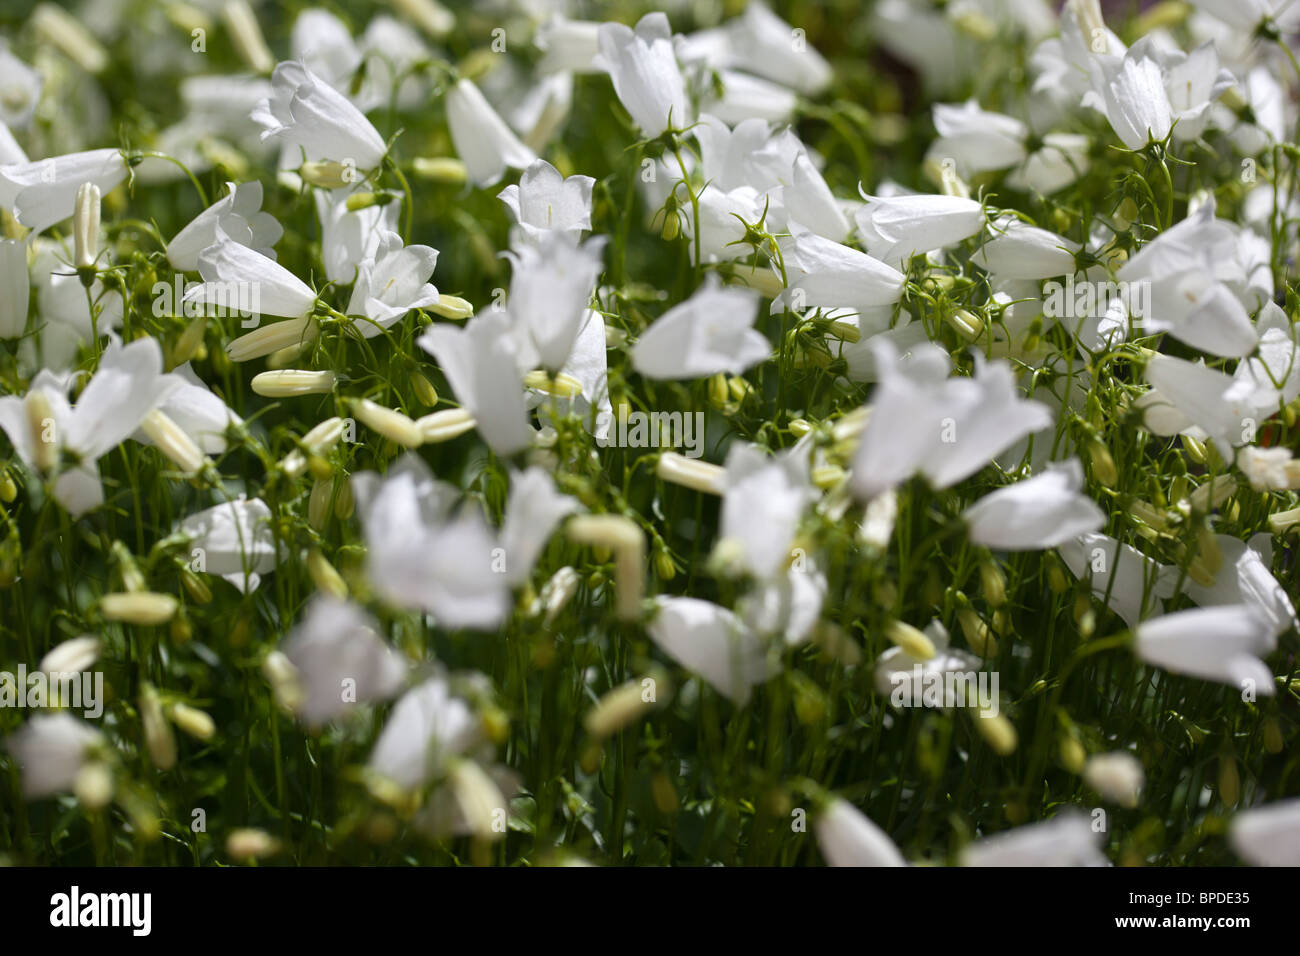 'Alba' Earleaf Bellflower, Dvärgklocka (Campanula cochlearifolia) Stock Photo